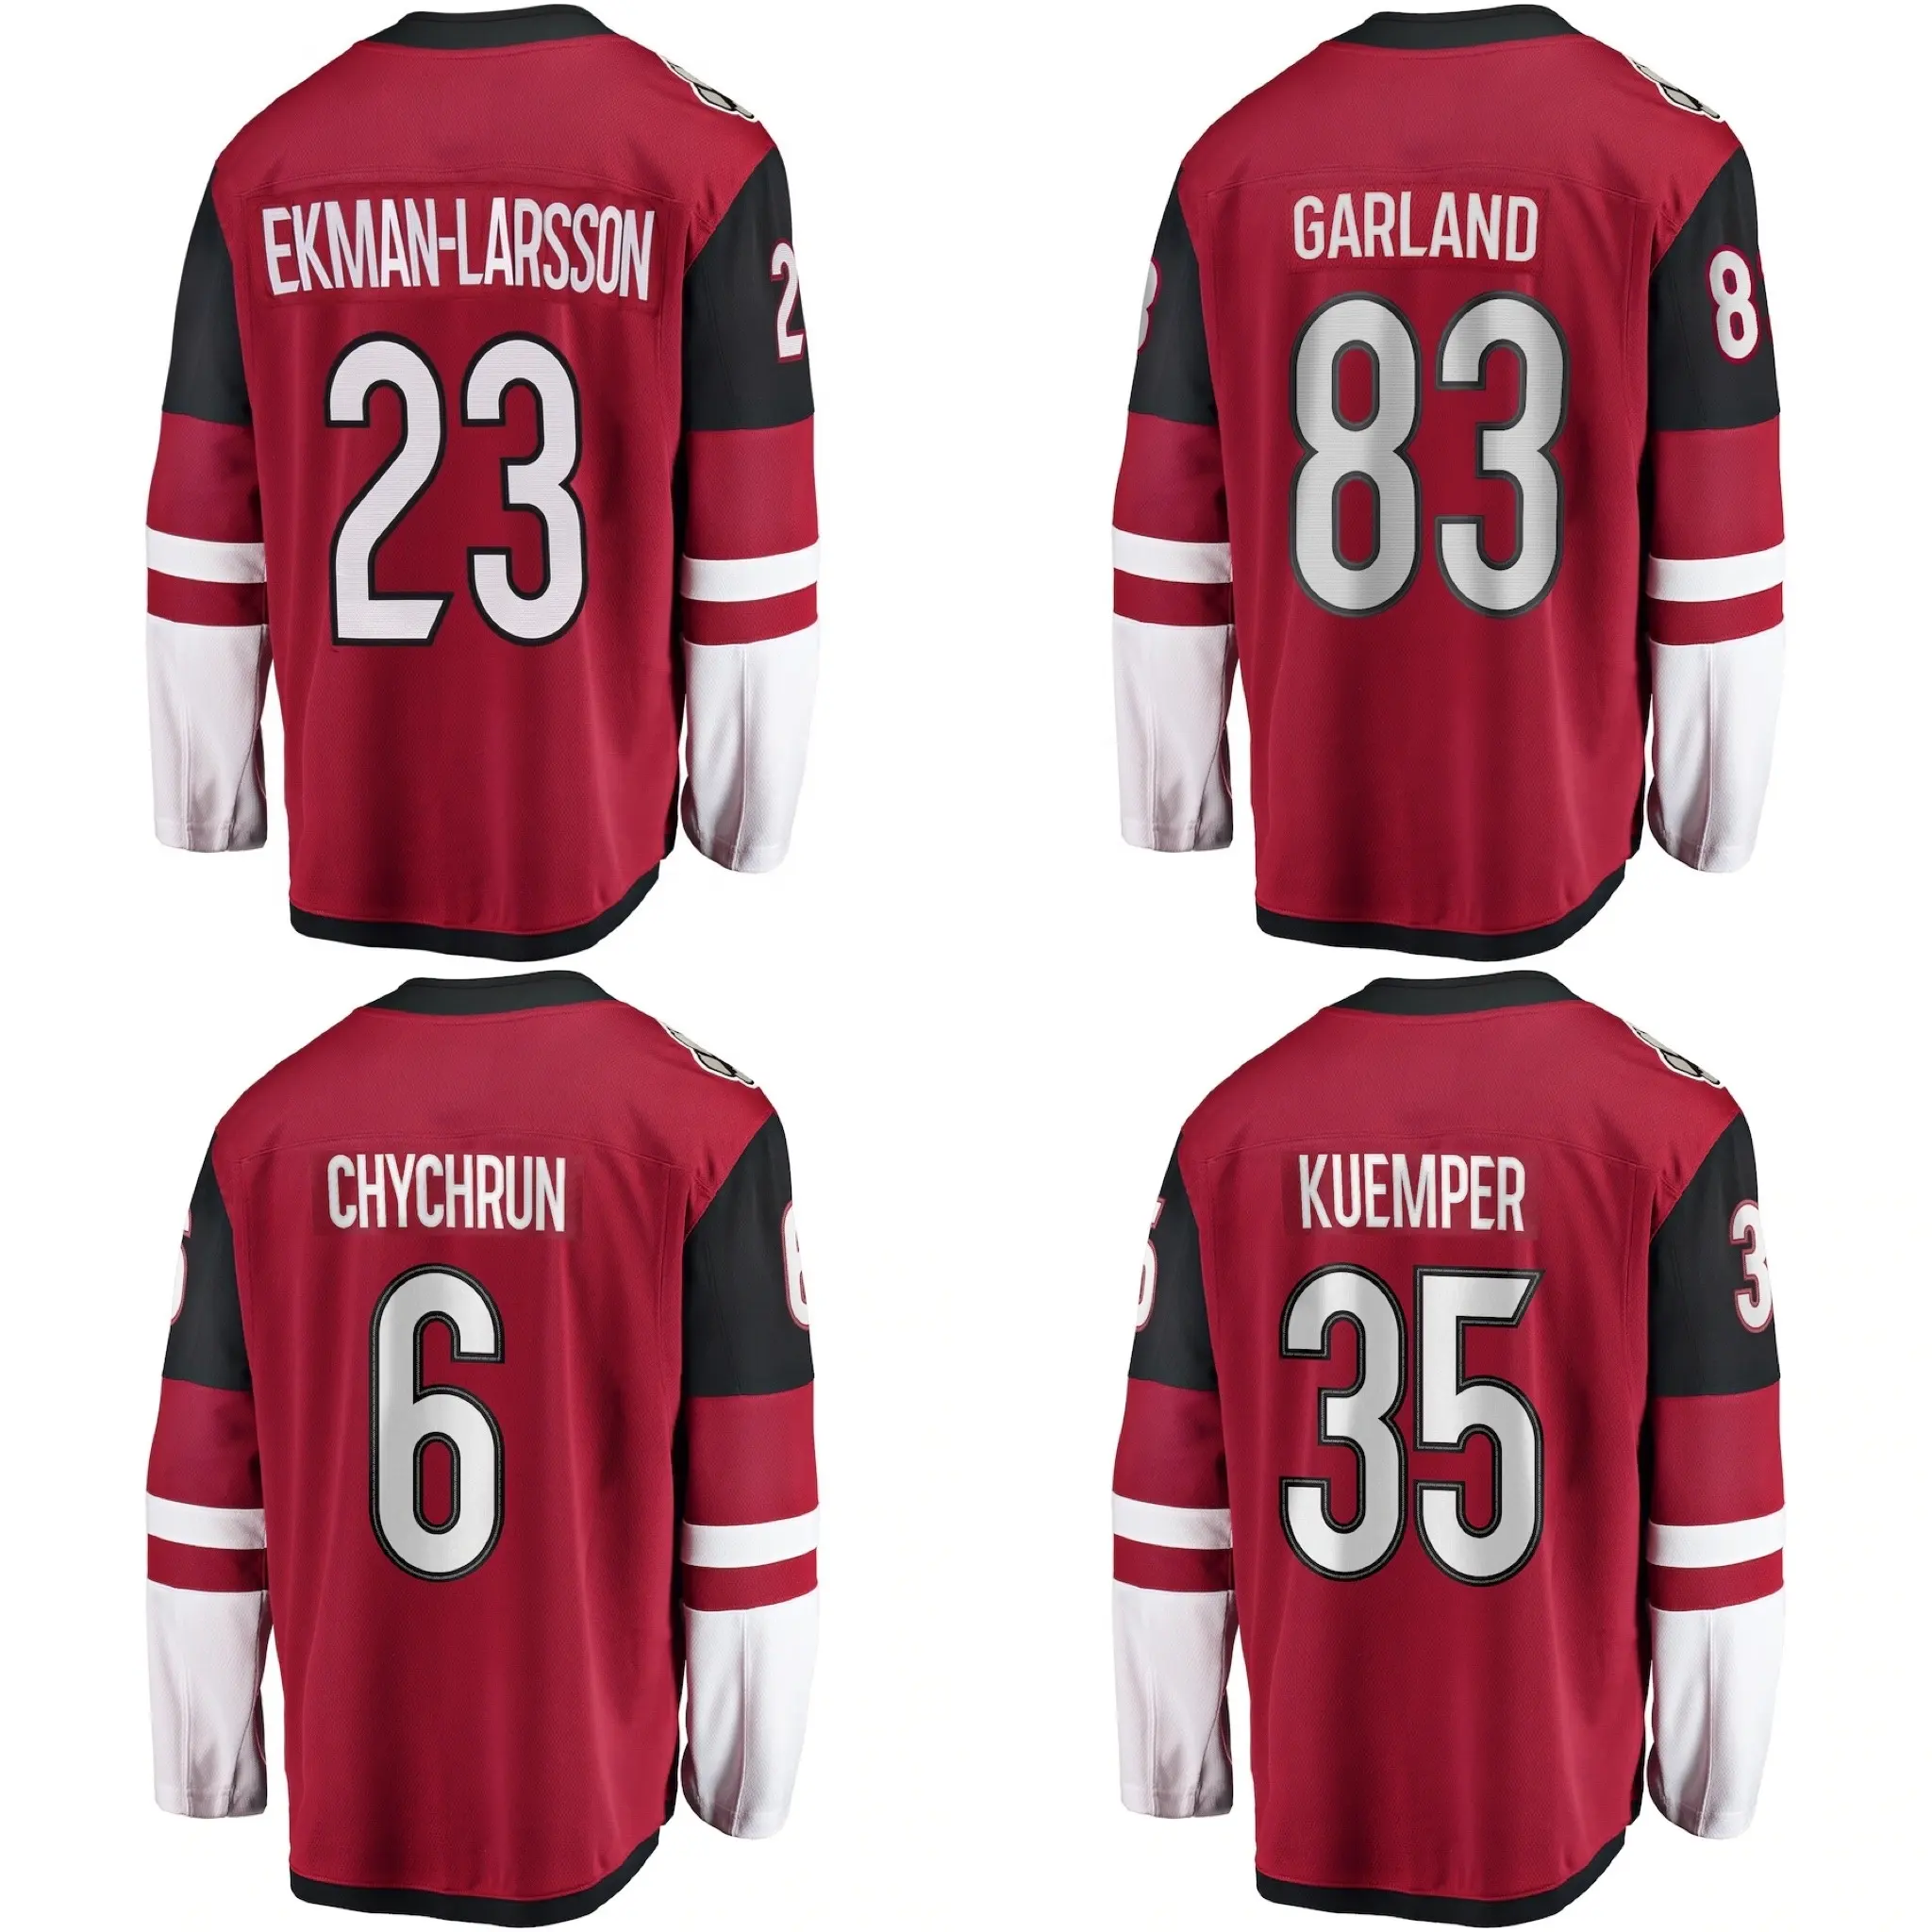 Custom Ice Hockey Jersey Arizona City Stitched Men's RED Coyote team uniform #23 Ekman-Larsson #83 Garland wholesale